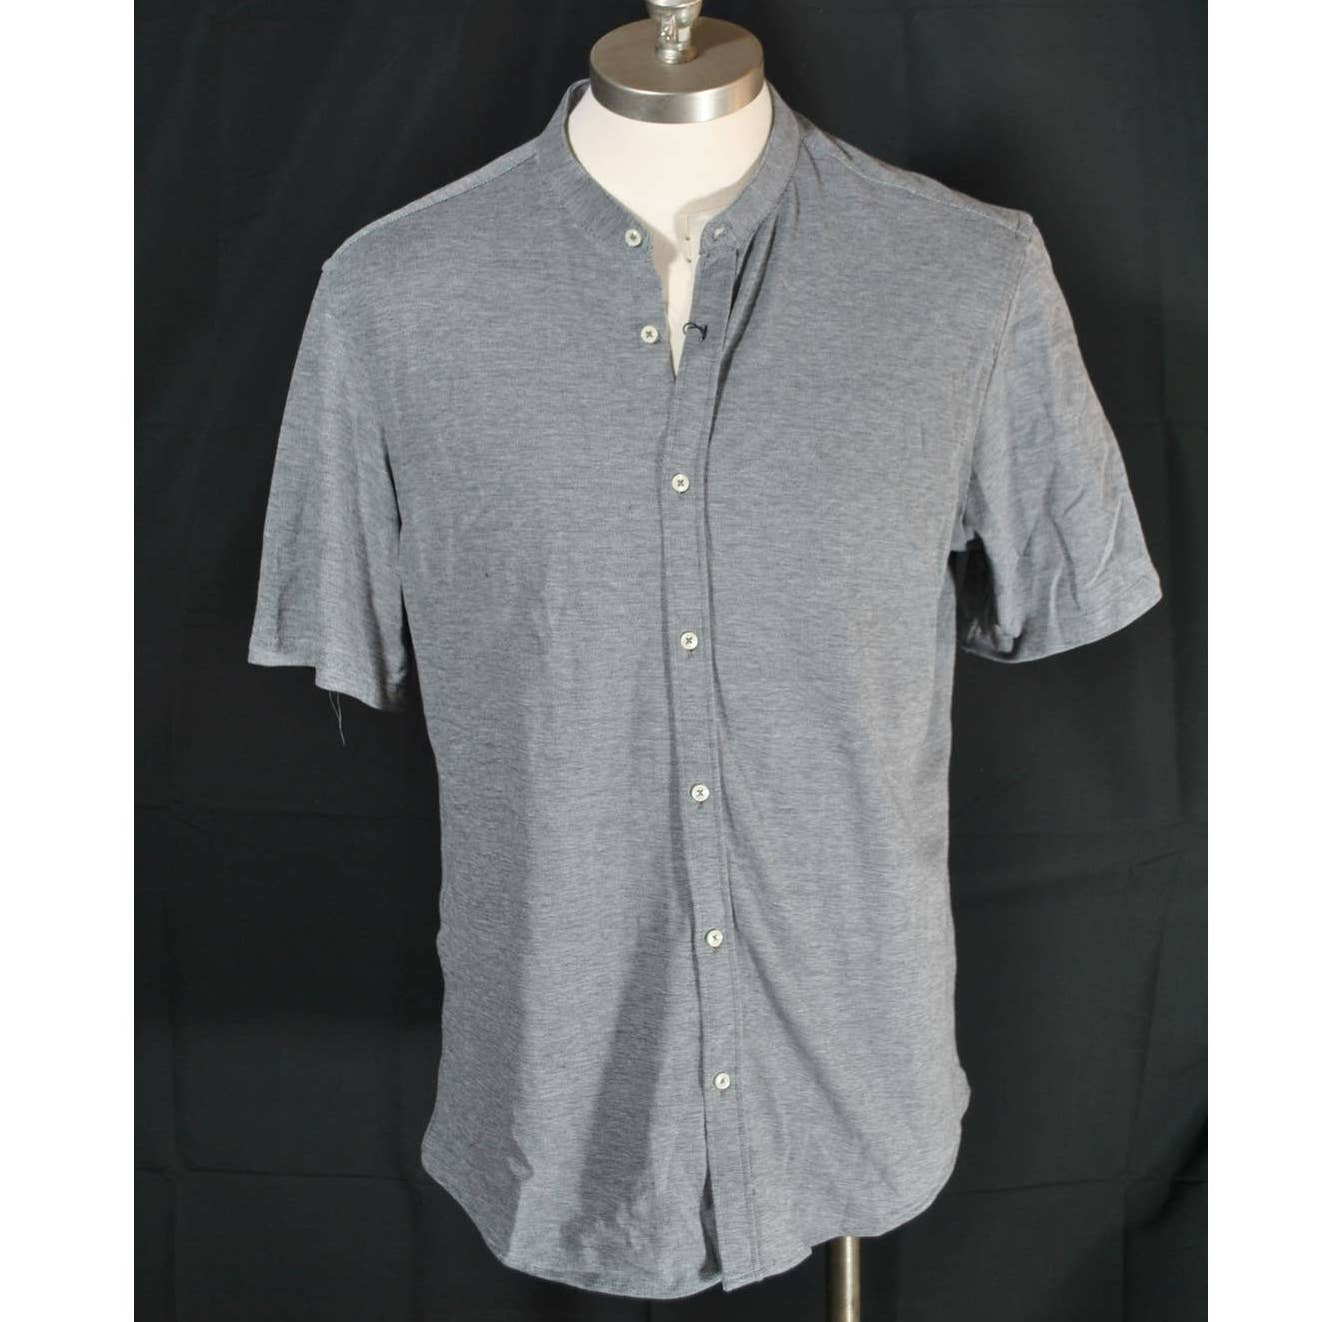 NWT Zara Heather Gray Band Collar Button Up Slim Fit Shirt - L